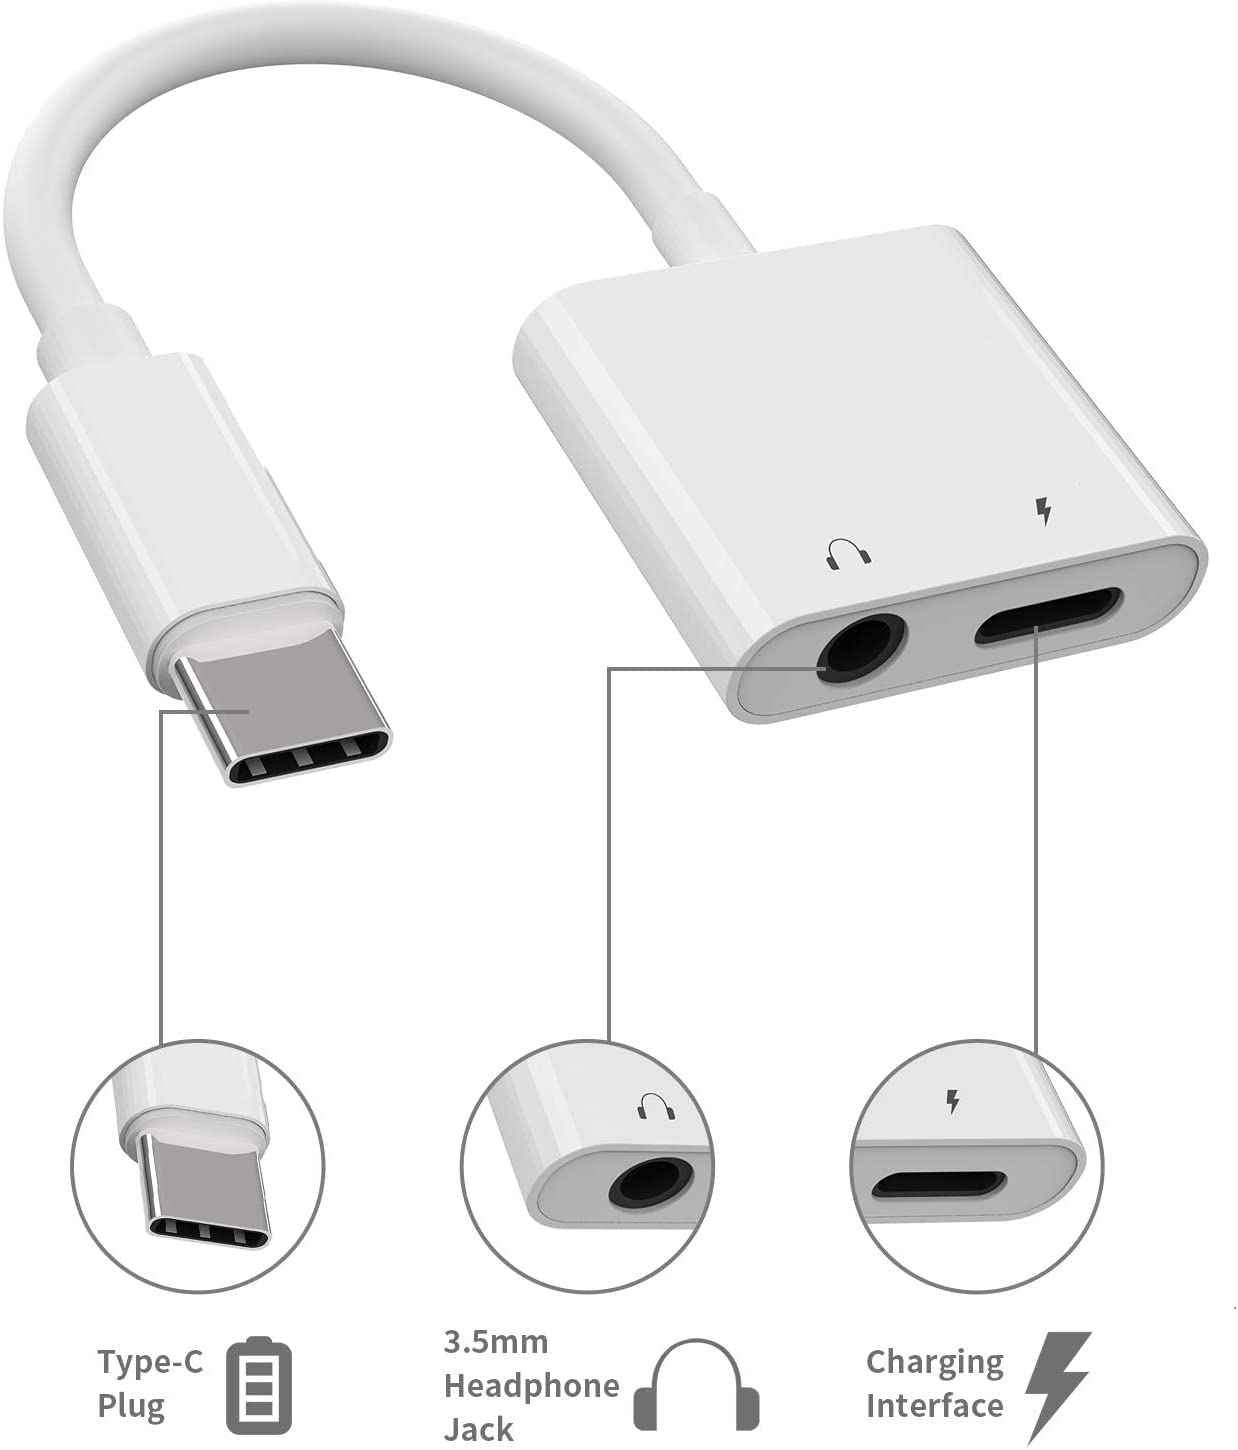 Adaptateur USB-C audio + recharge